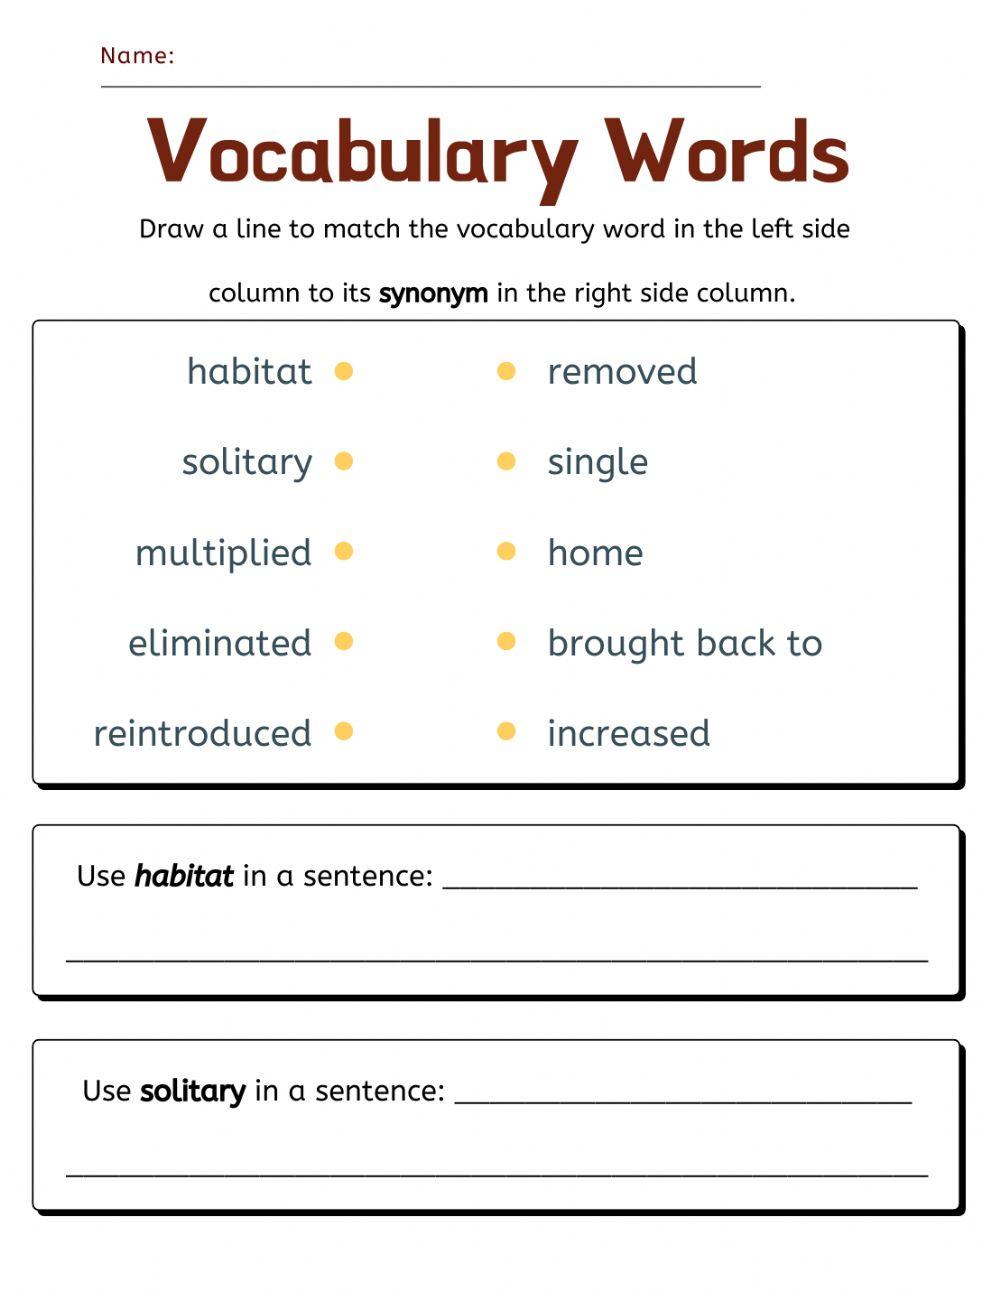 Vocabulary U2 W4